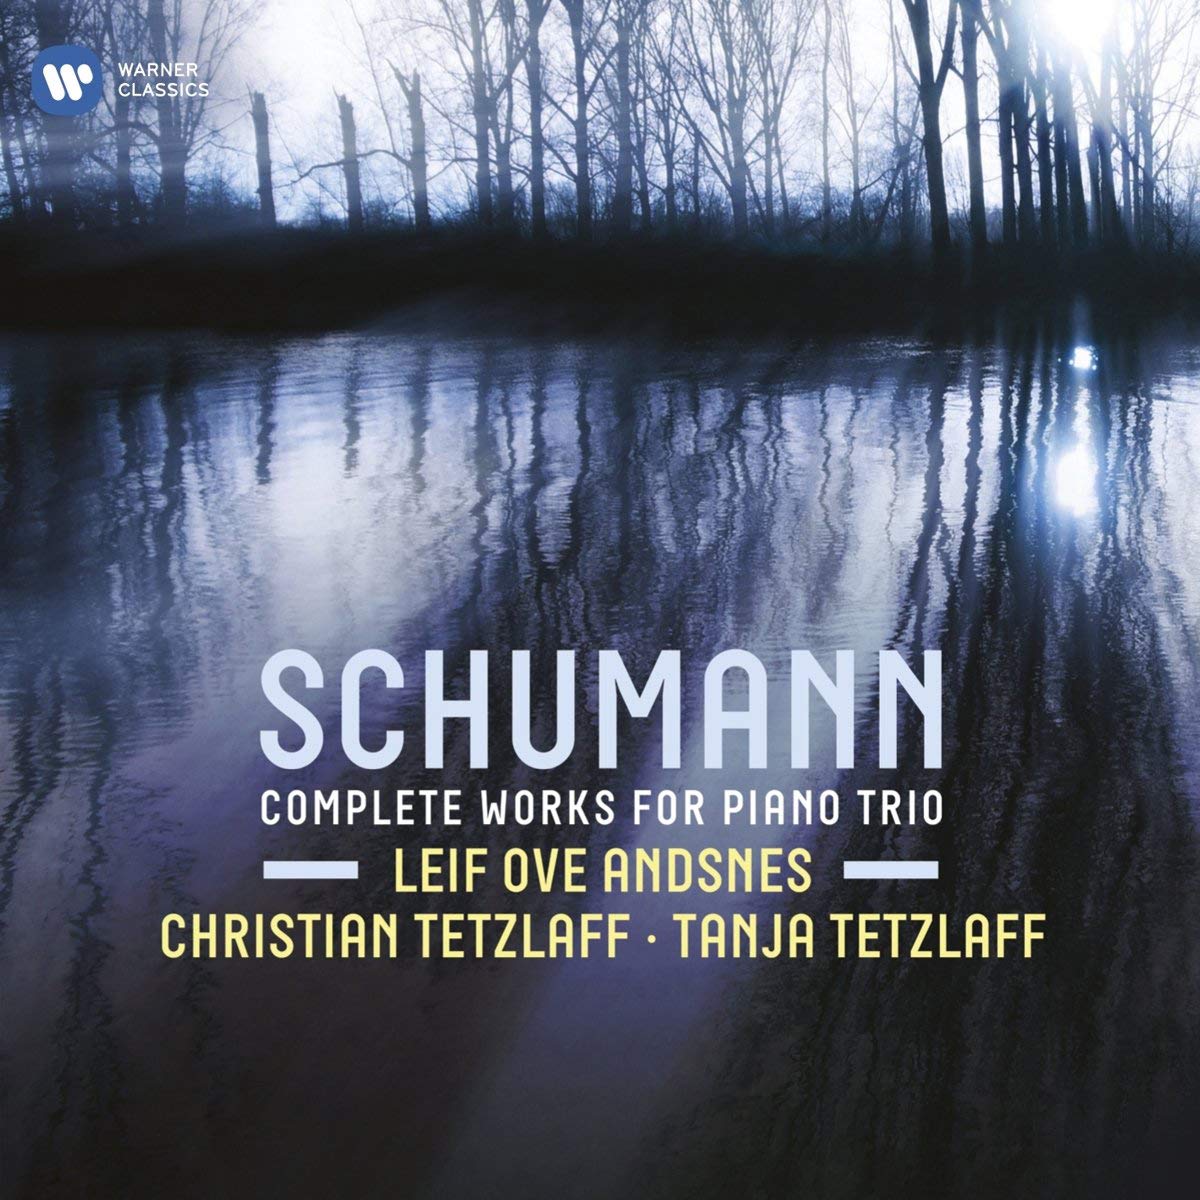 Schumann: Complete Works for Piano Trio | Robert Schumann, Leif Ove Andsnes, Christian Tetzlaff, Tanja Tetzlaff